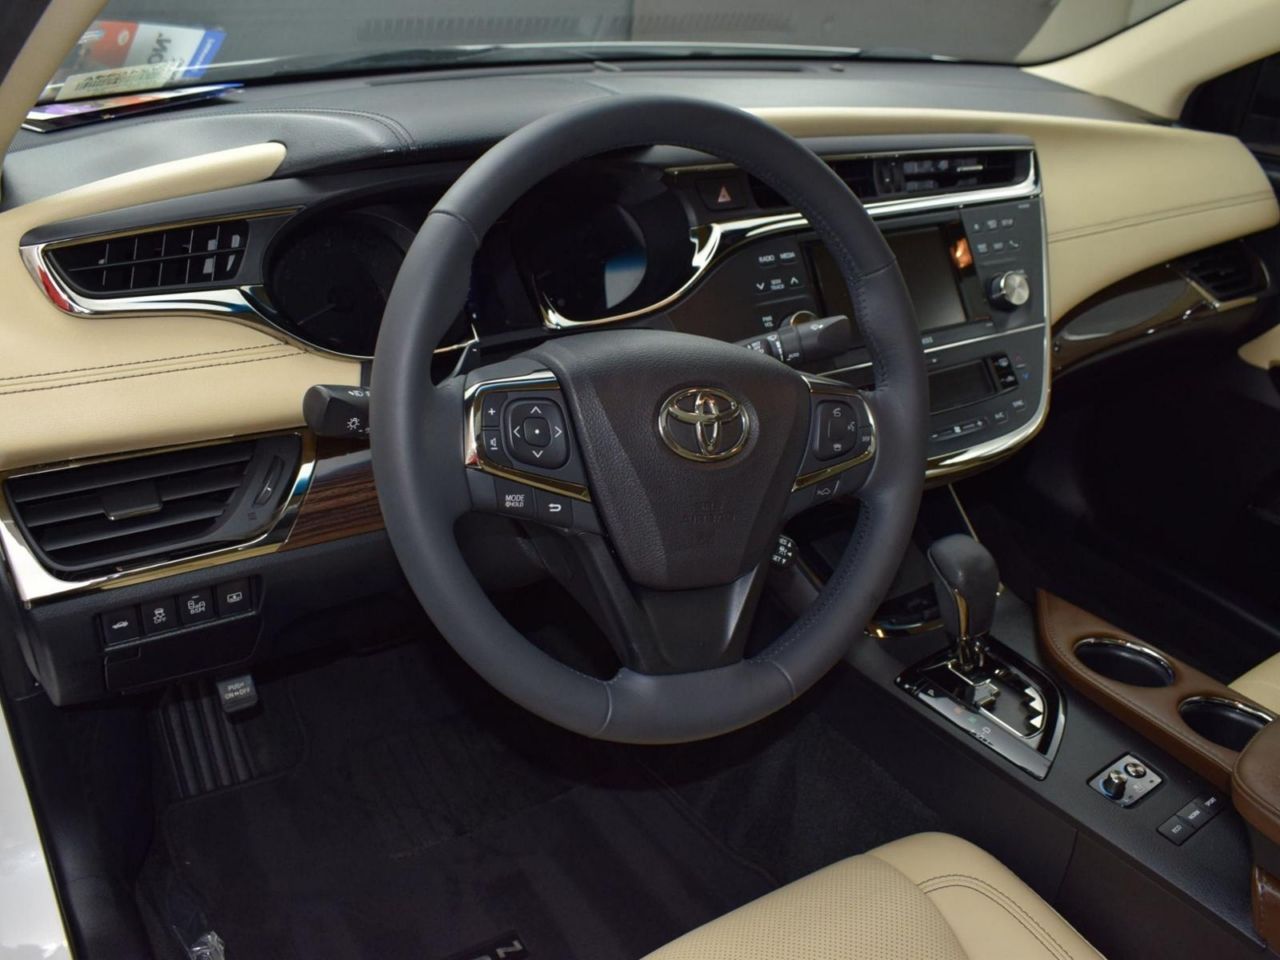 2014 Toyota Avalon